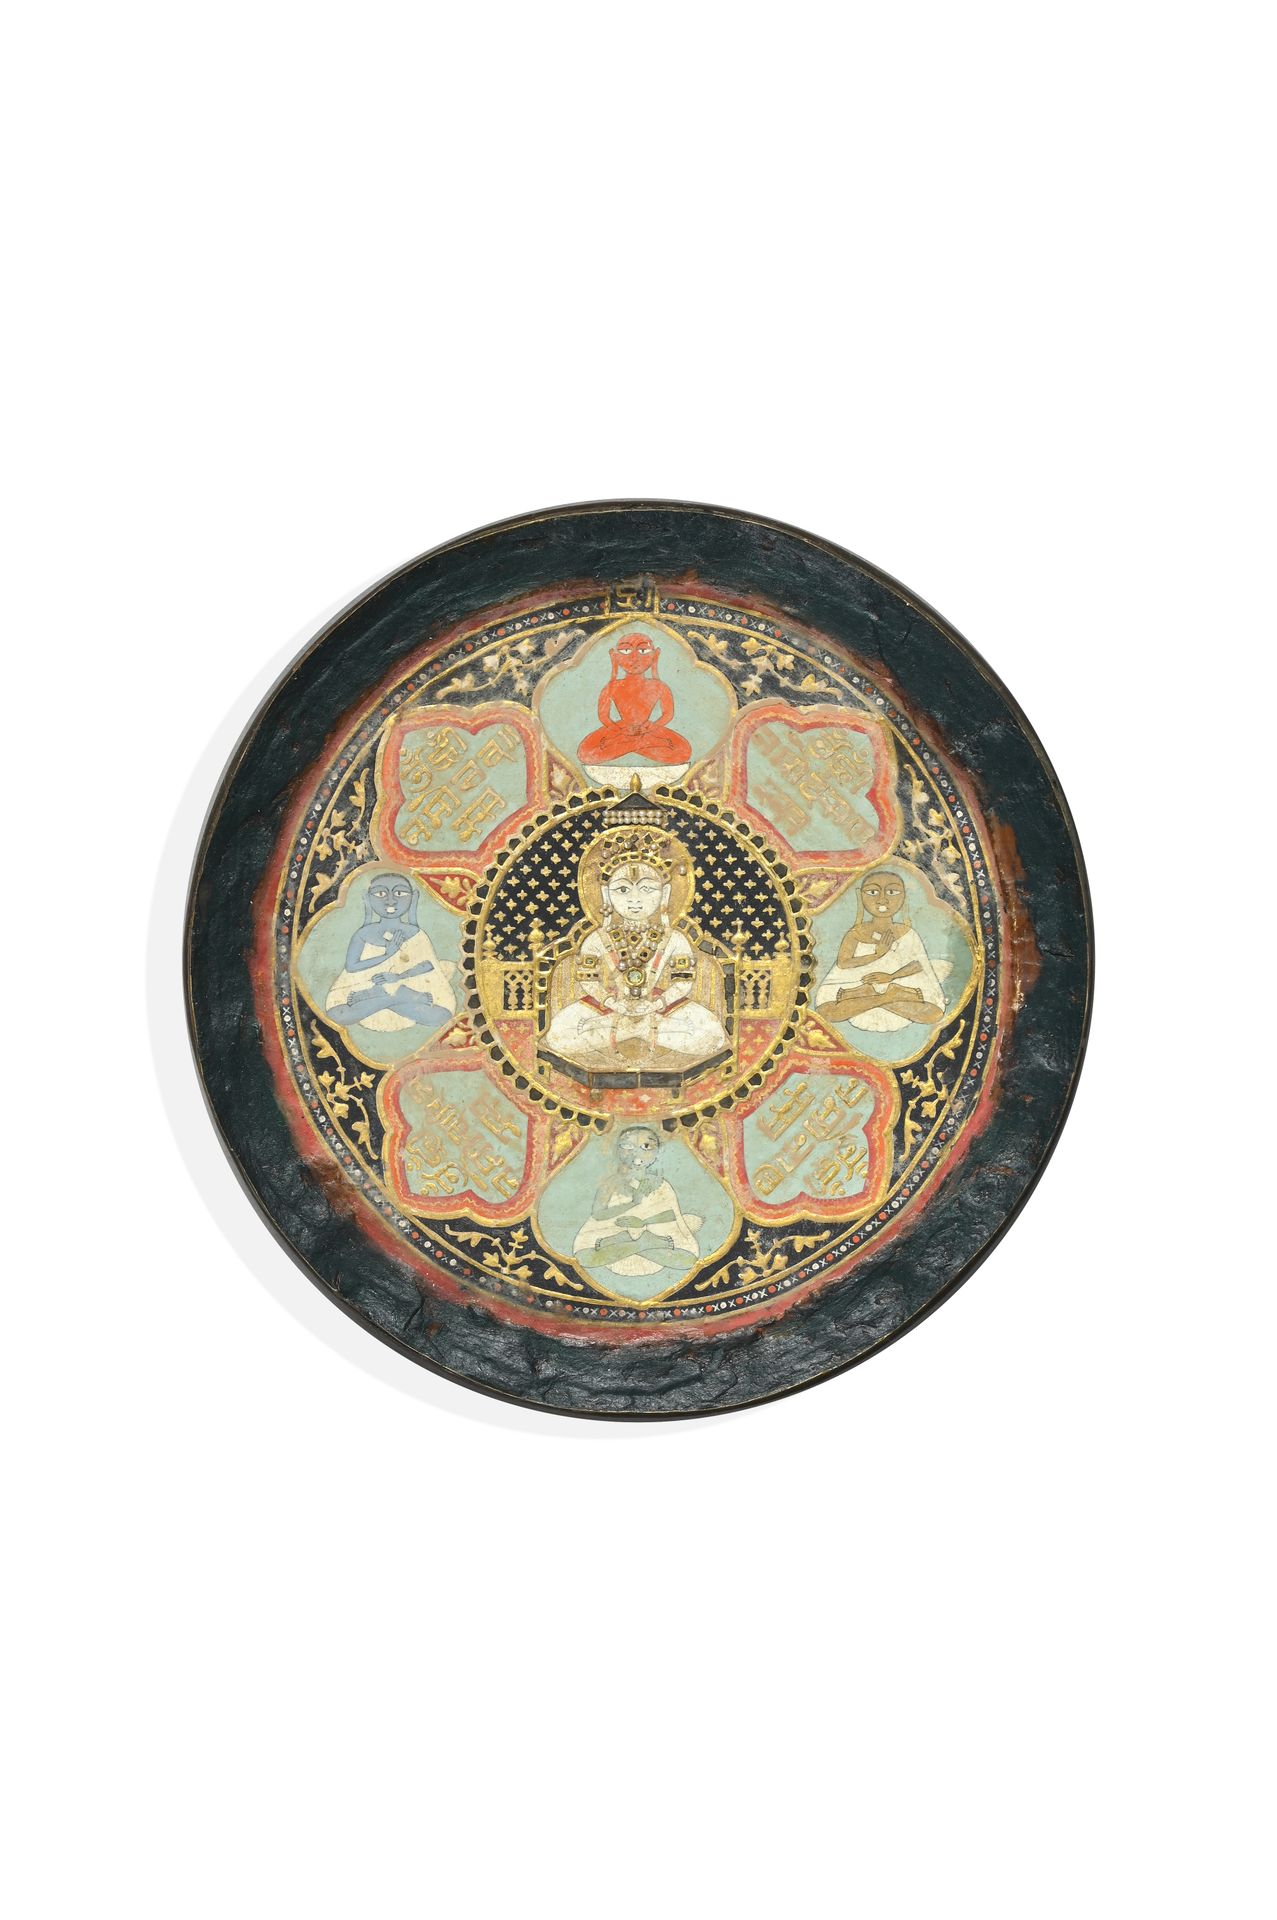 NEPAL - XIXème 
小型旅行唐卡。




装饰包括中心的
耆那教提婆 ，镶嵌着几颗珠子，周围是其他提婆和佛教文本。用黄金强化的多色镶嵌。




&hellip;